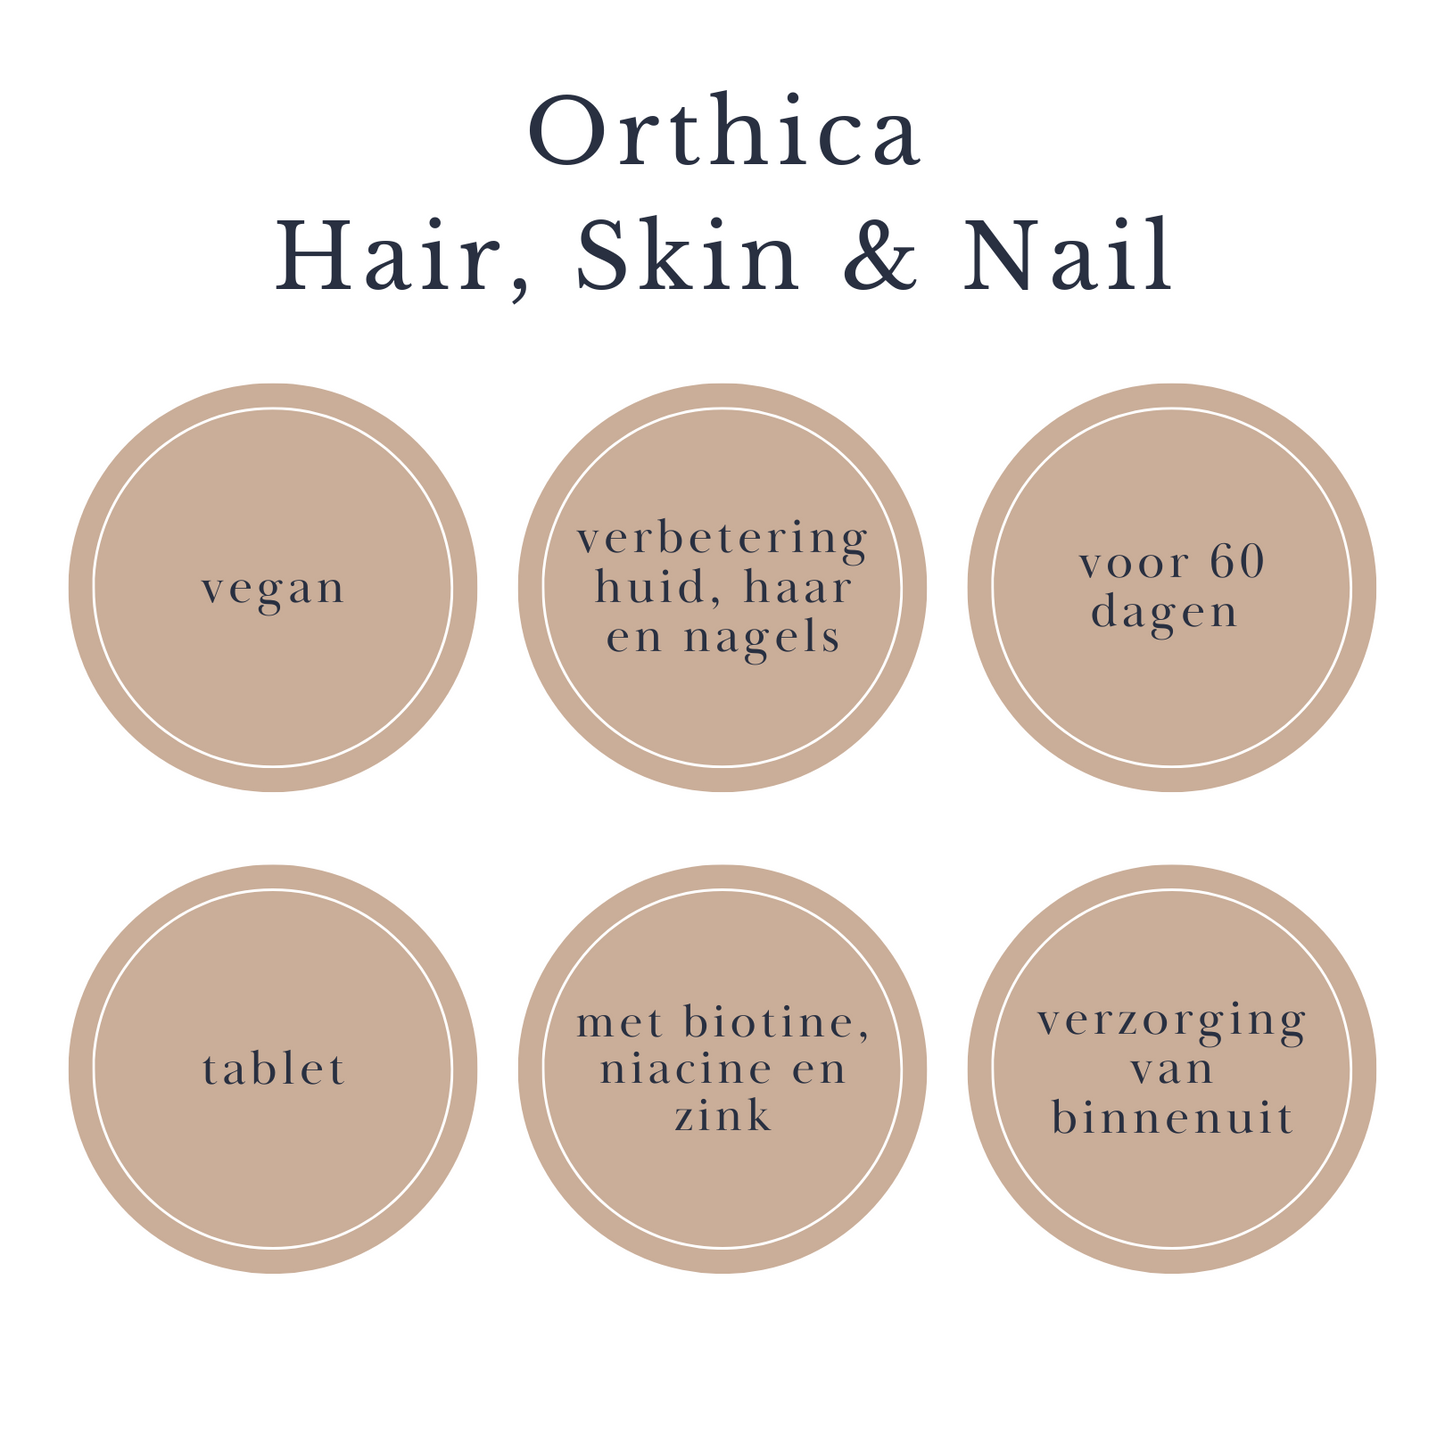 orthica hair skin nail